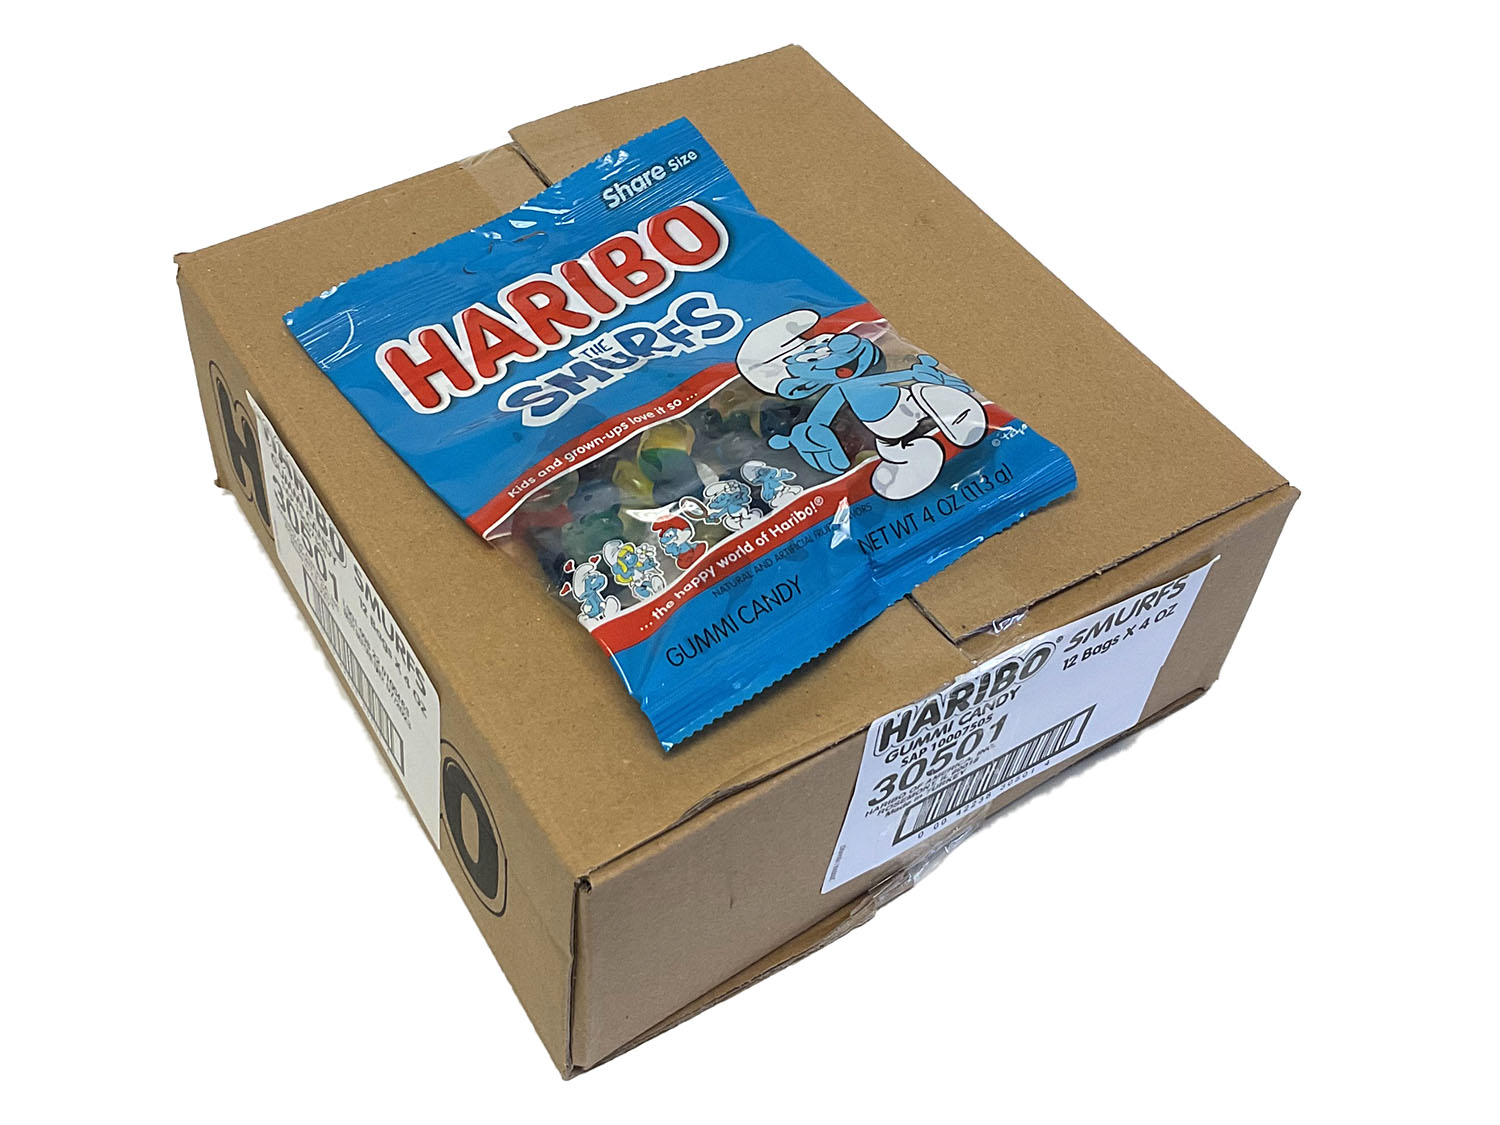 Haribo Gummi Candy, The Smurfs - 4 oz